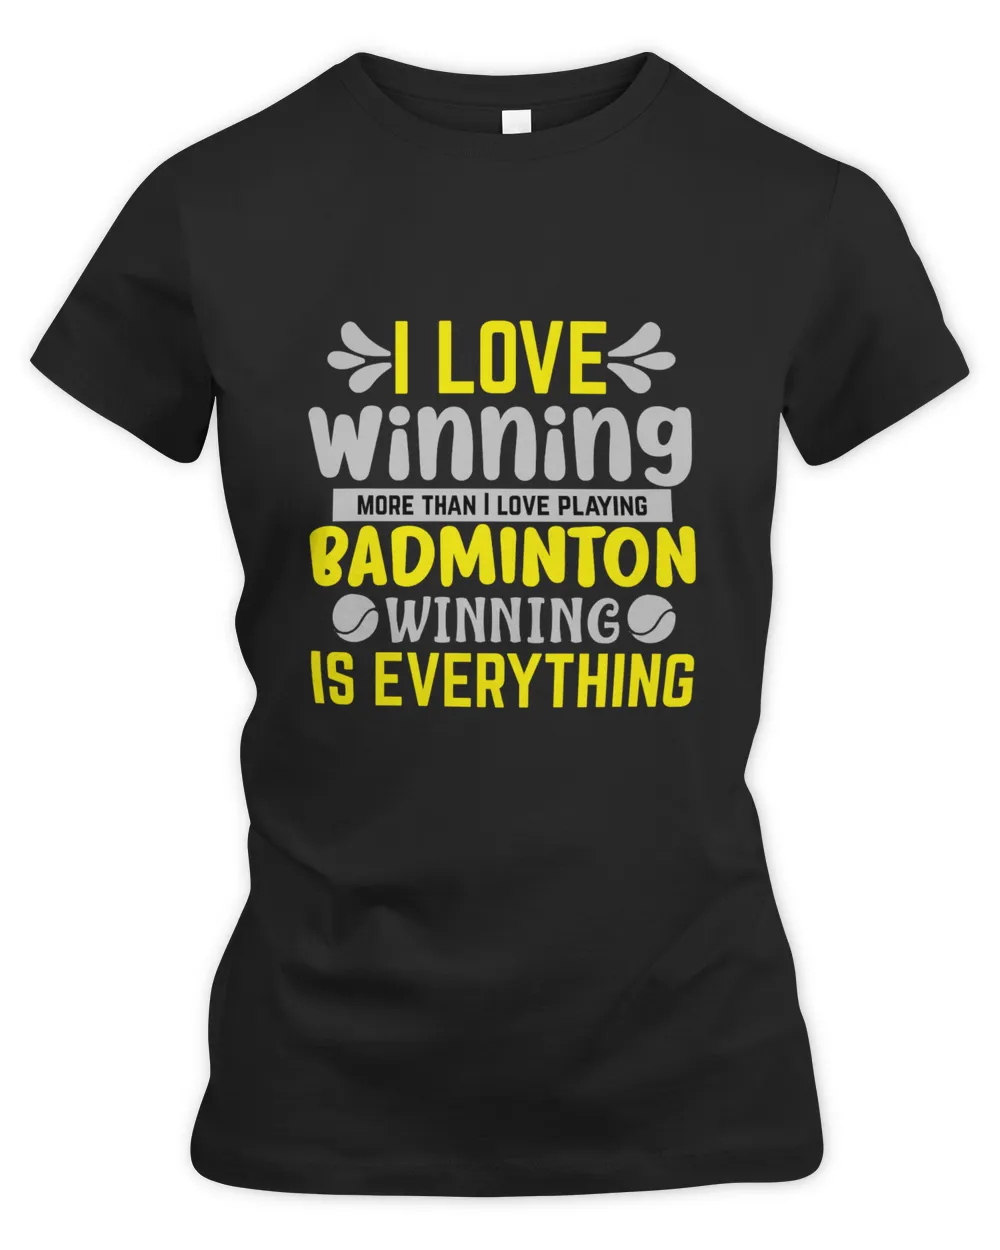 I LOVE Winning More Than I Love Playing BADMINTON WINNINGIS EVERYTHING Shirt, Badminton Shirt,Badminton T-shirt,Funny Badminton Shirt, Badminton Gift,Sport Shirt